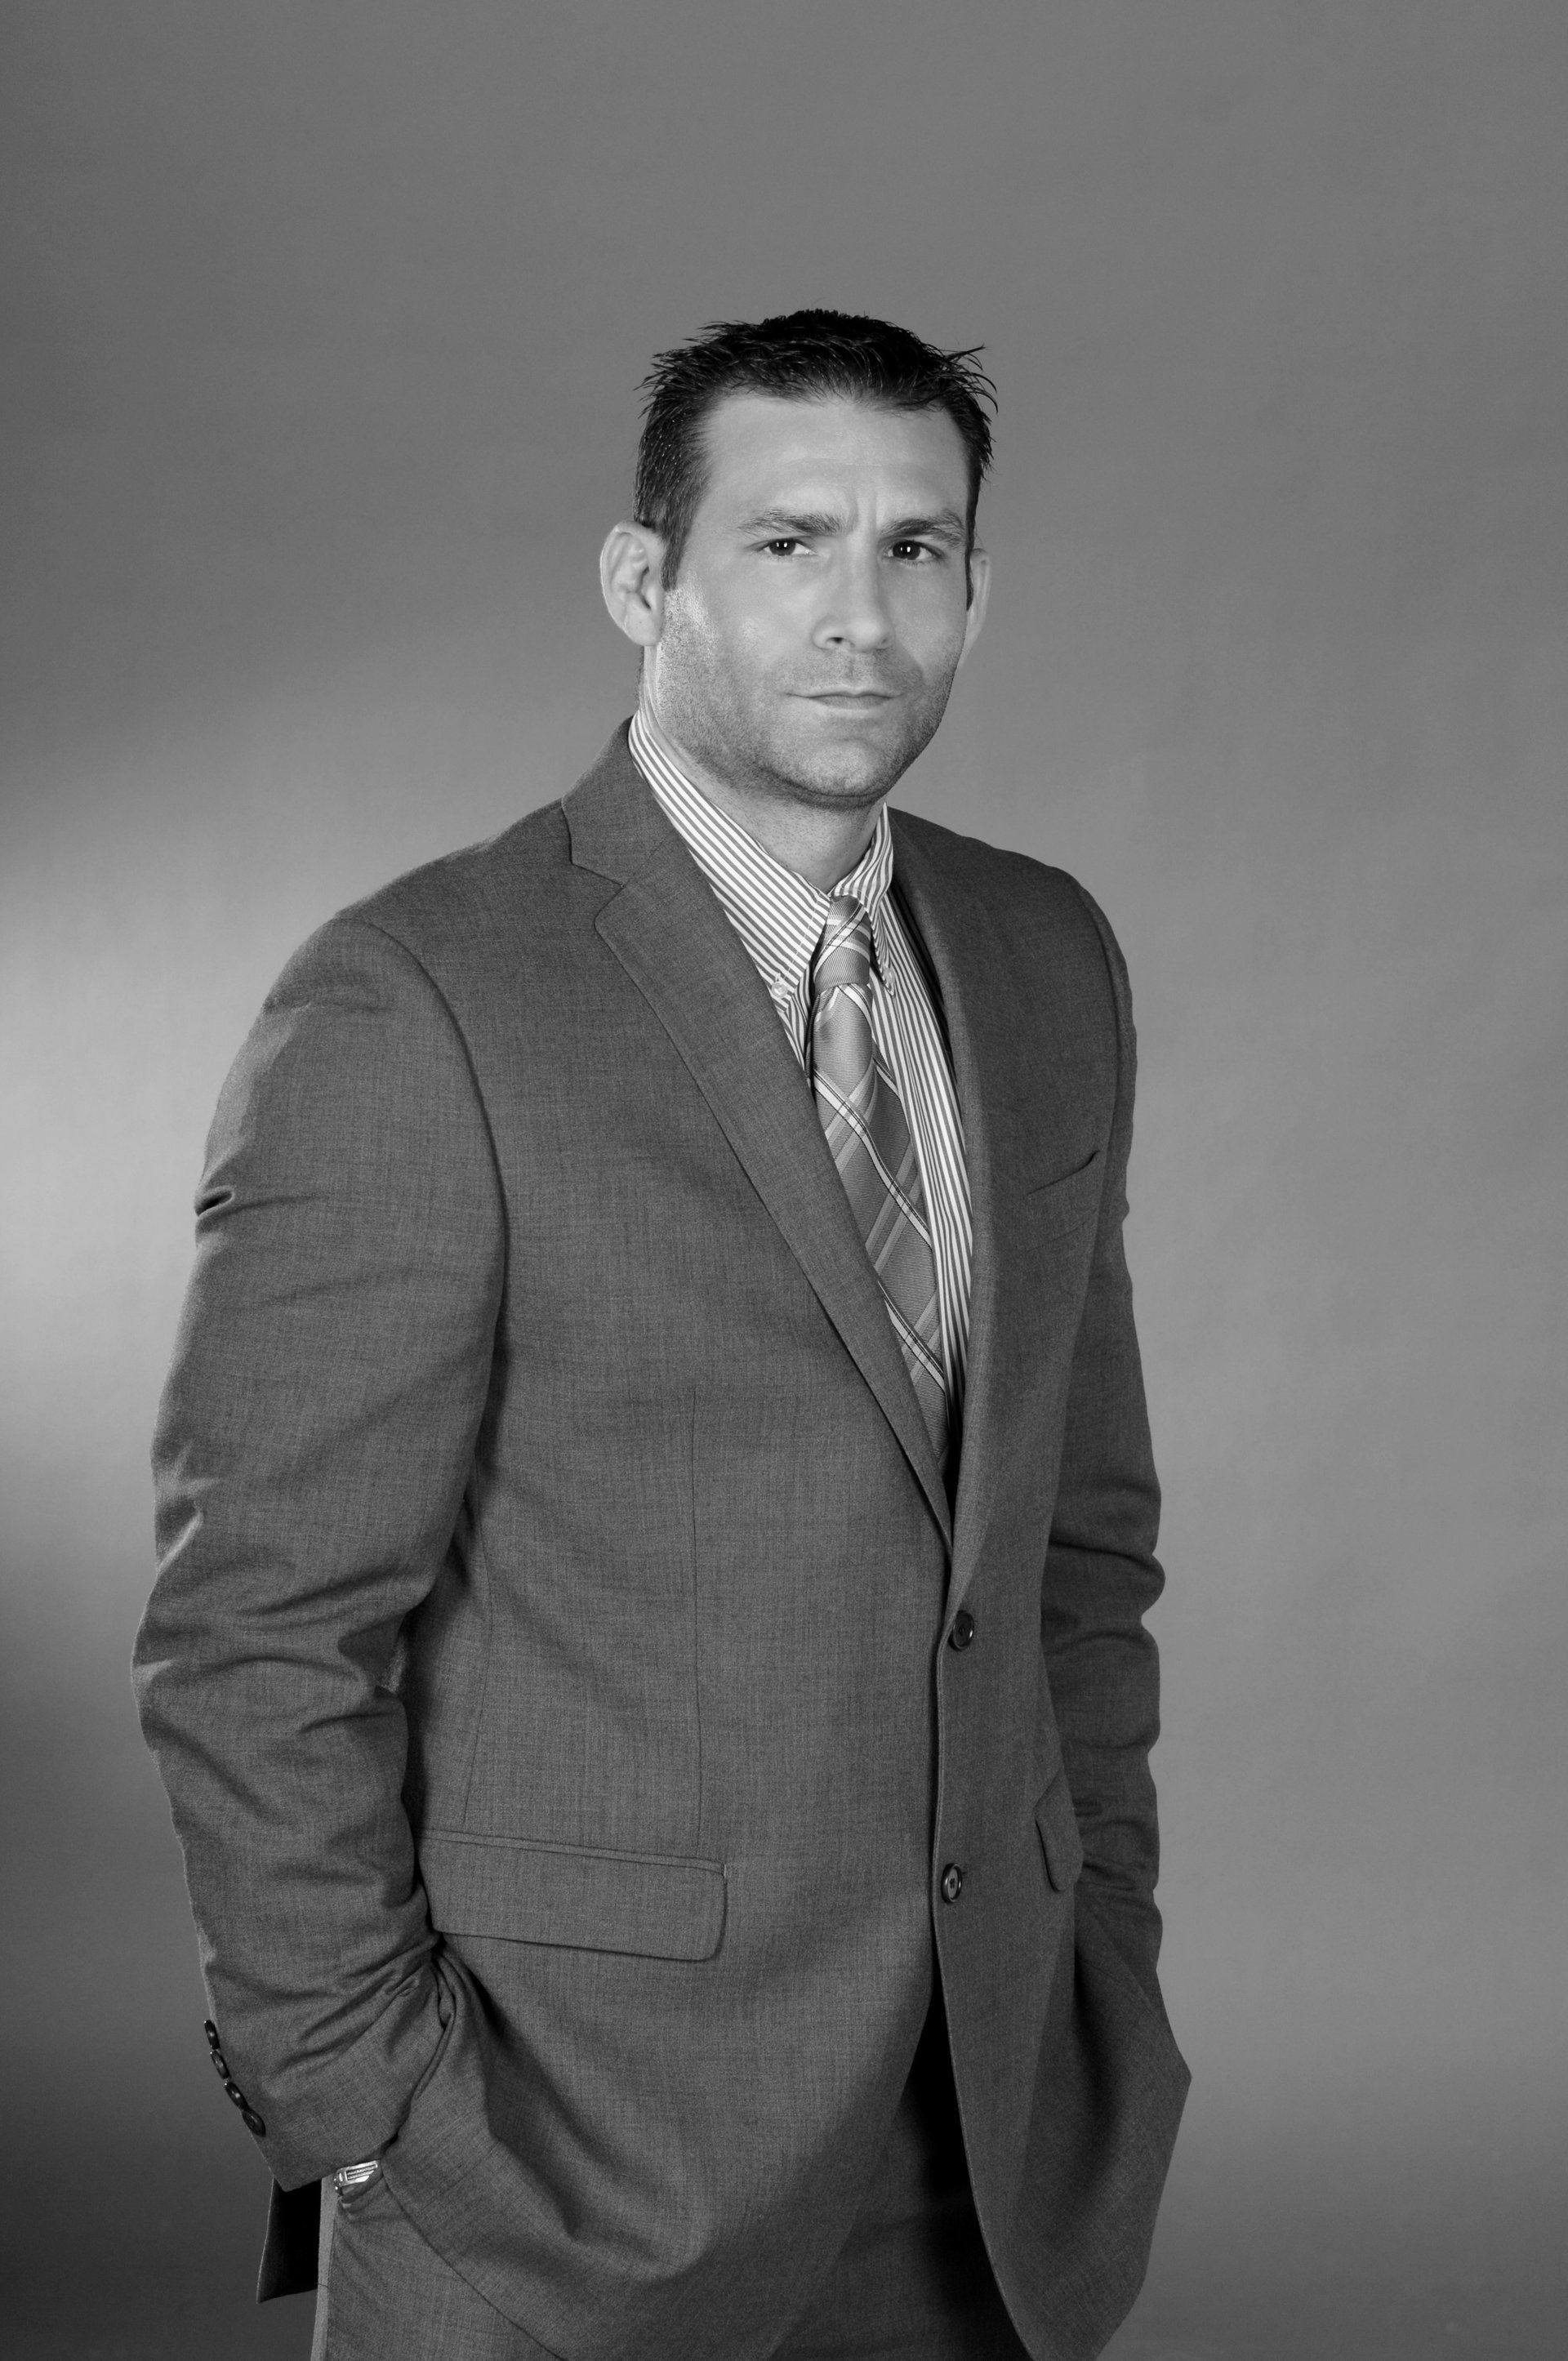 An Image of Broward domestic violence attorney Antonio D. Quinn